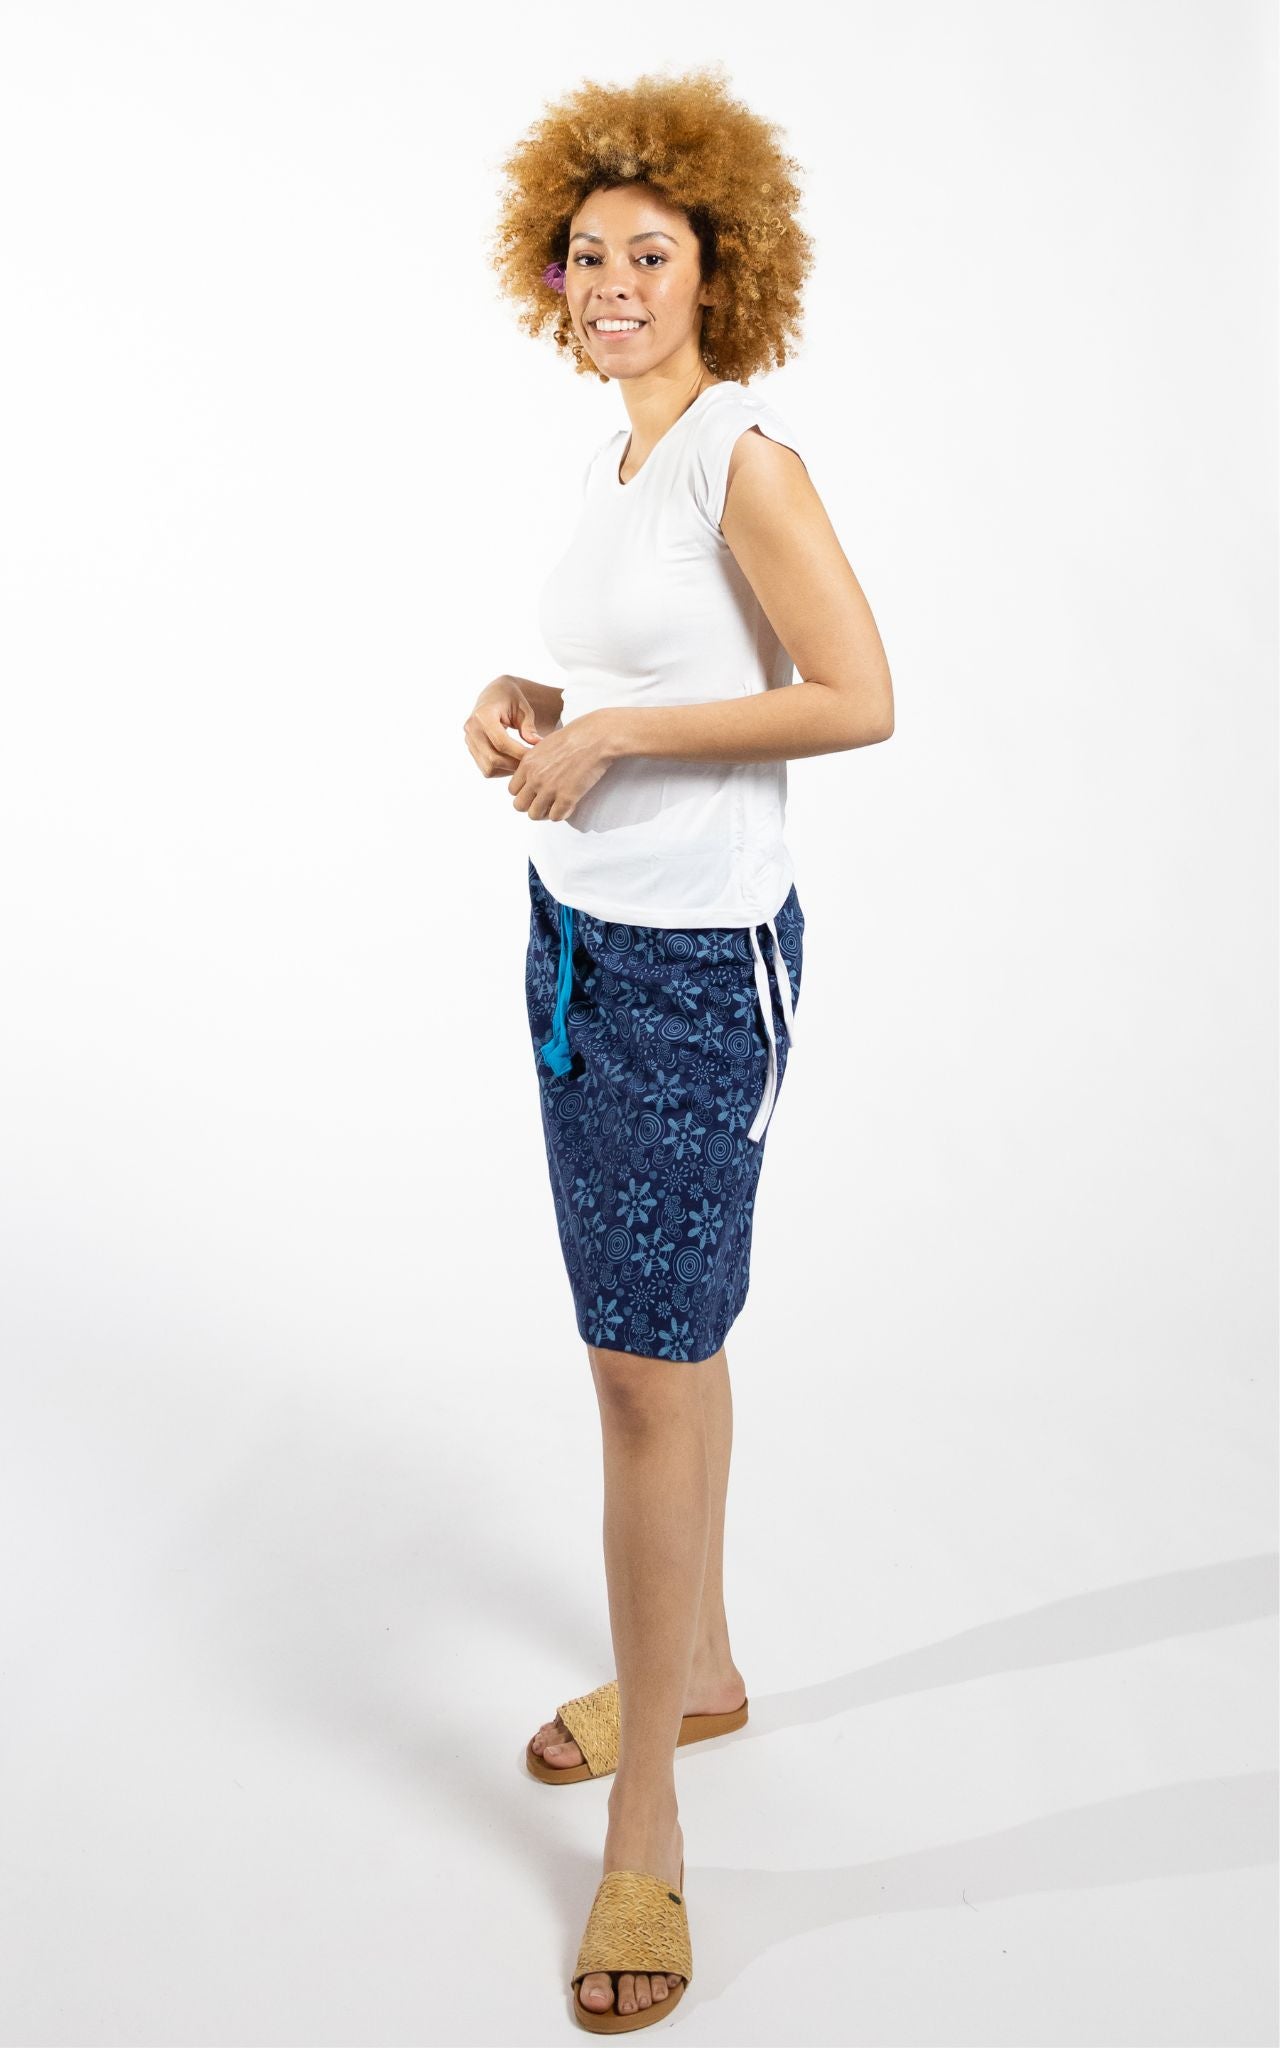 Surya Australia Cotton 'Stella' Skirt made in Nepal - Blue